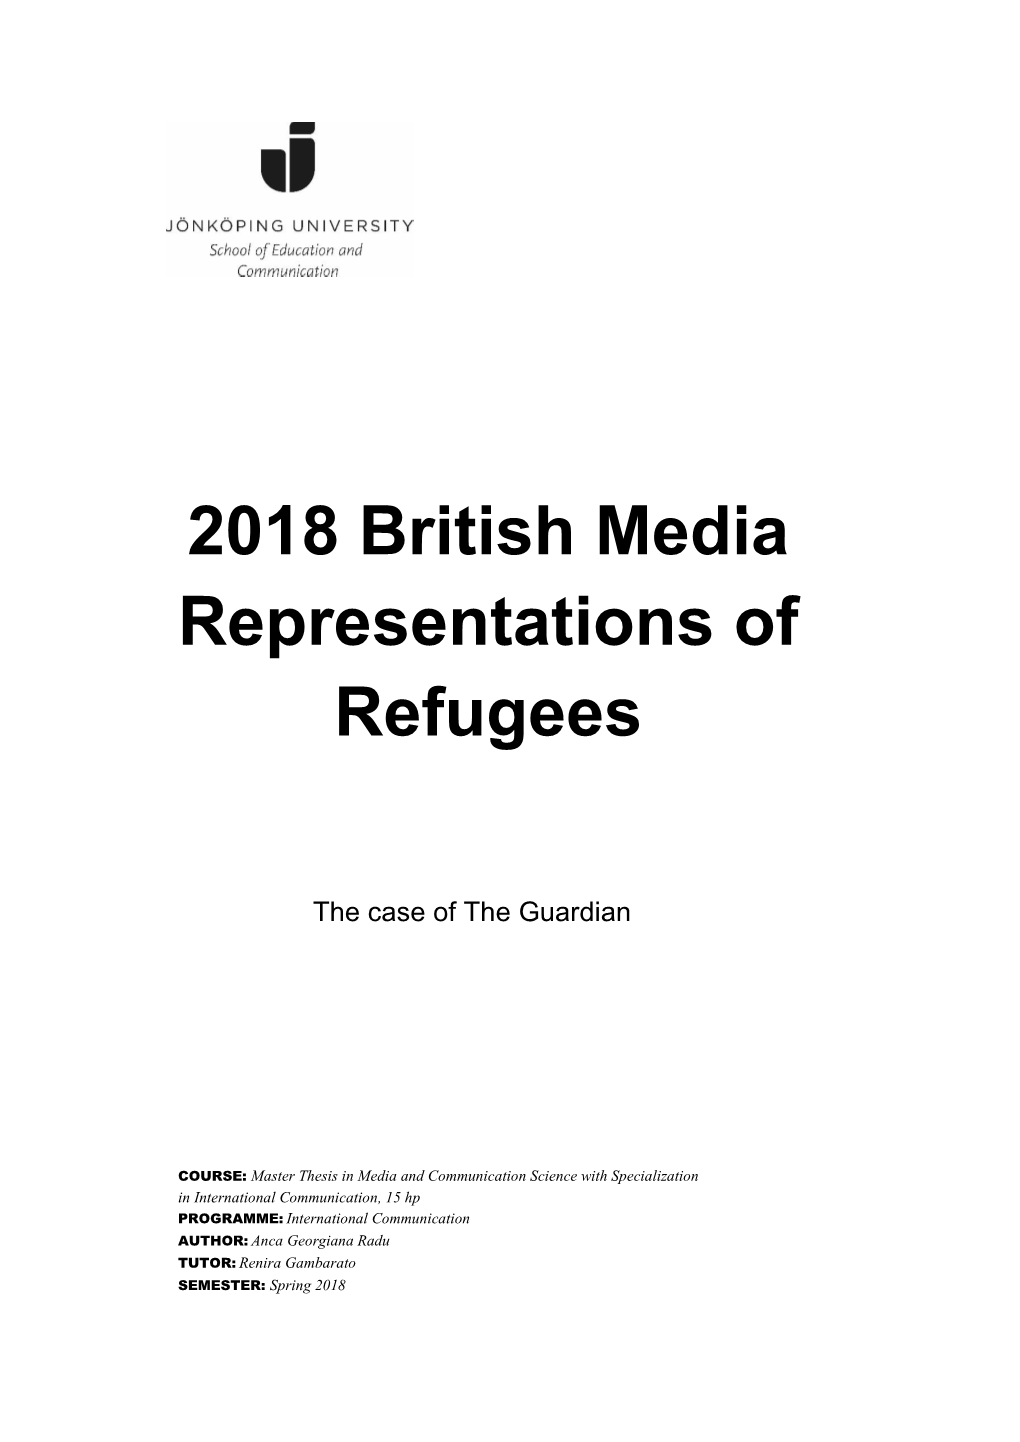 2018 British Media Representations of Refugees